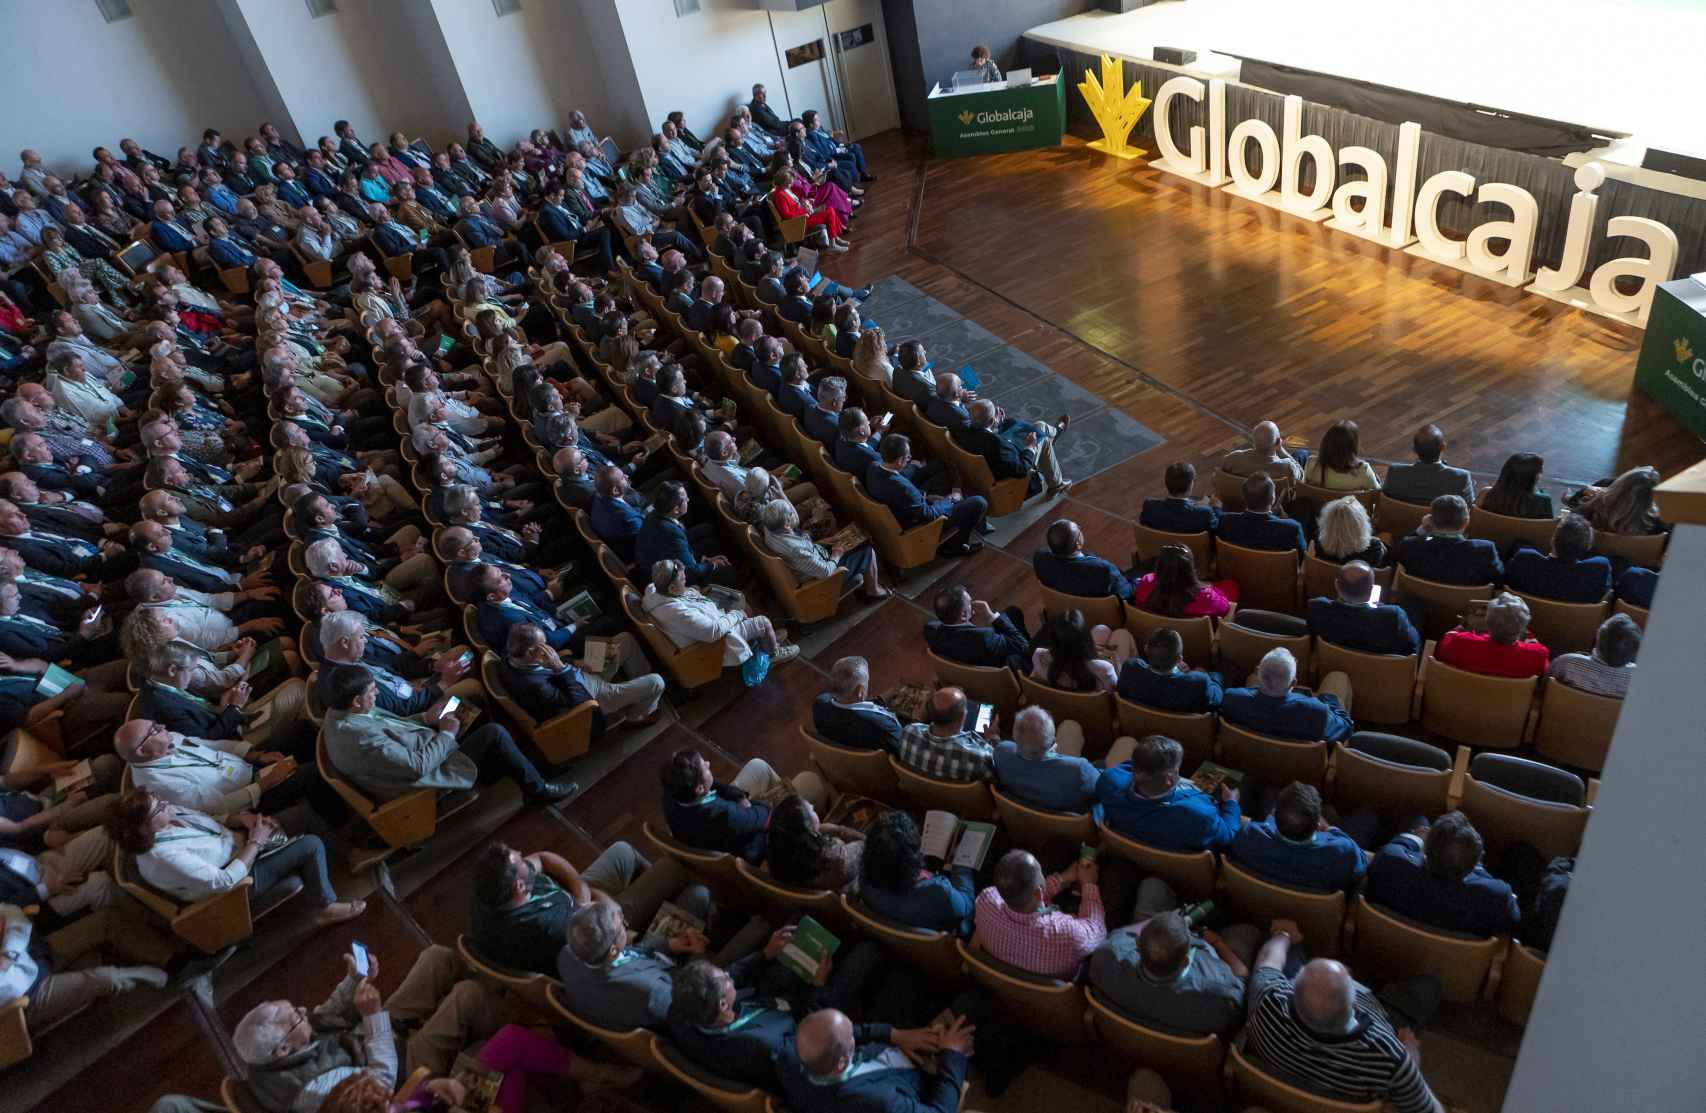 Asamblea General de Globalcaja 2023. Foto: Globalcaja.